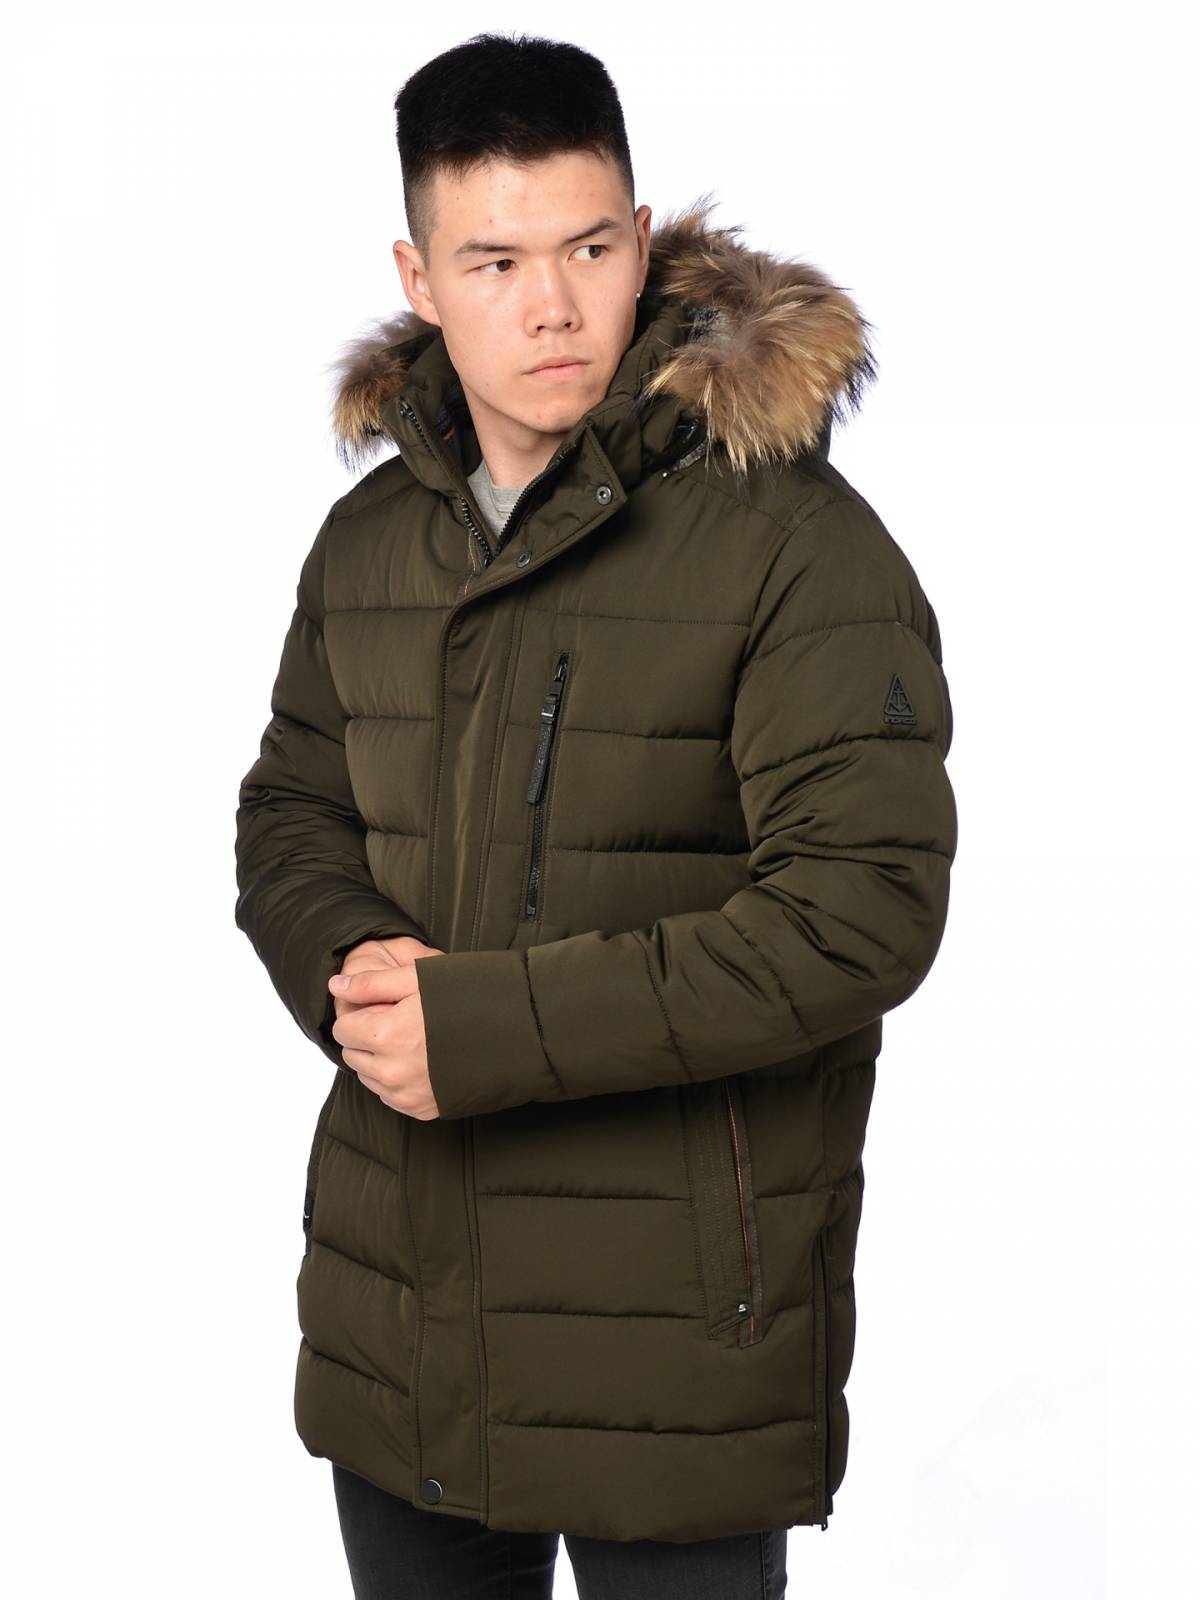 Зимняя куртка мужская Indaco 3800 хаки 50 RU